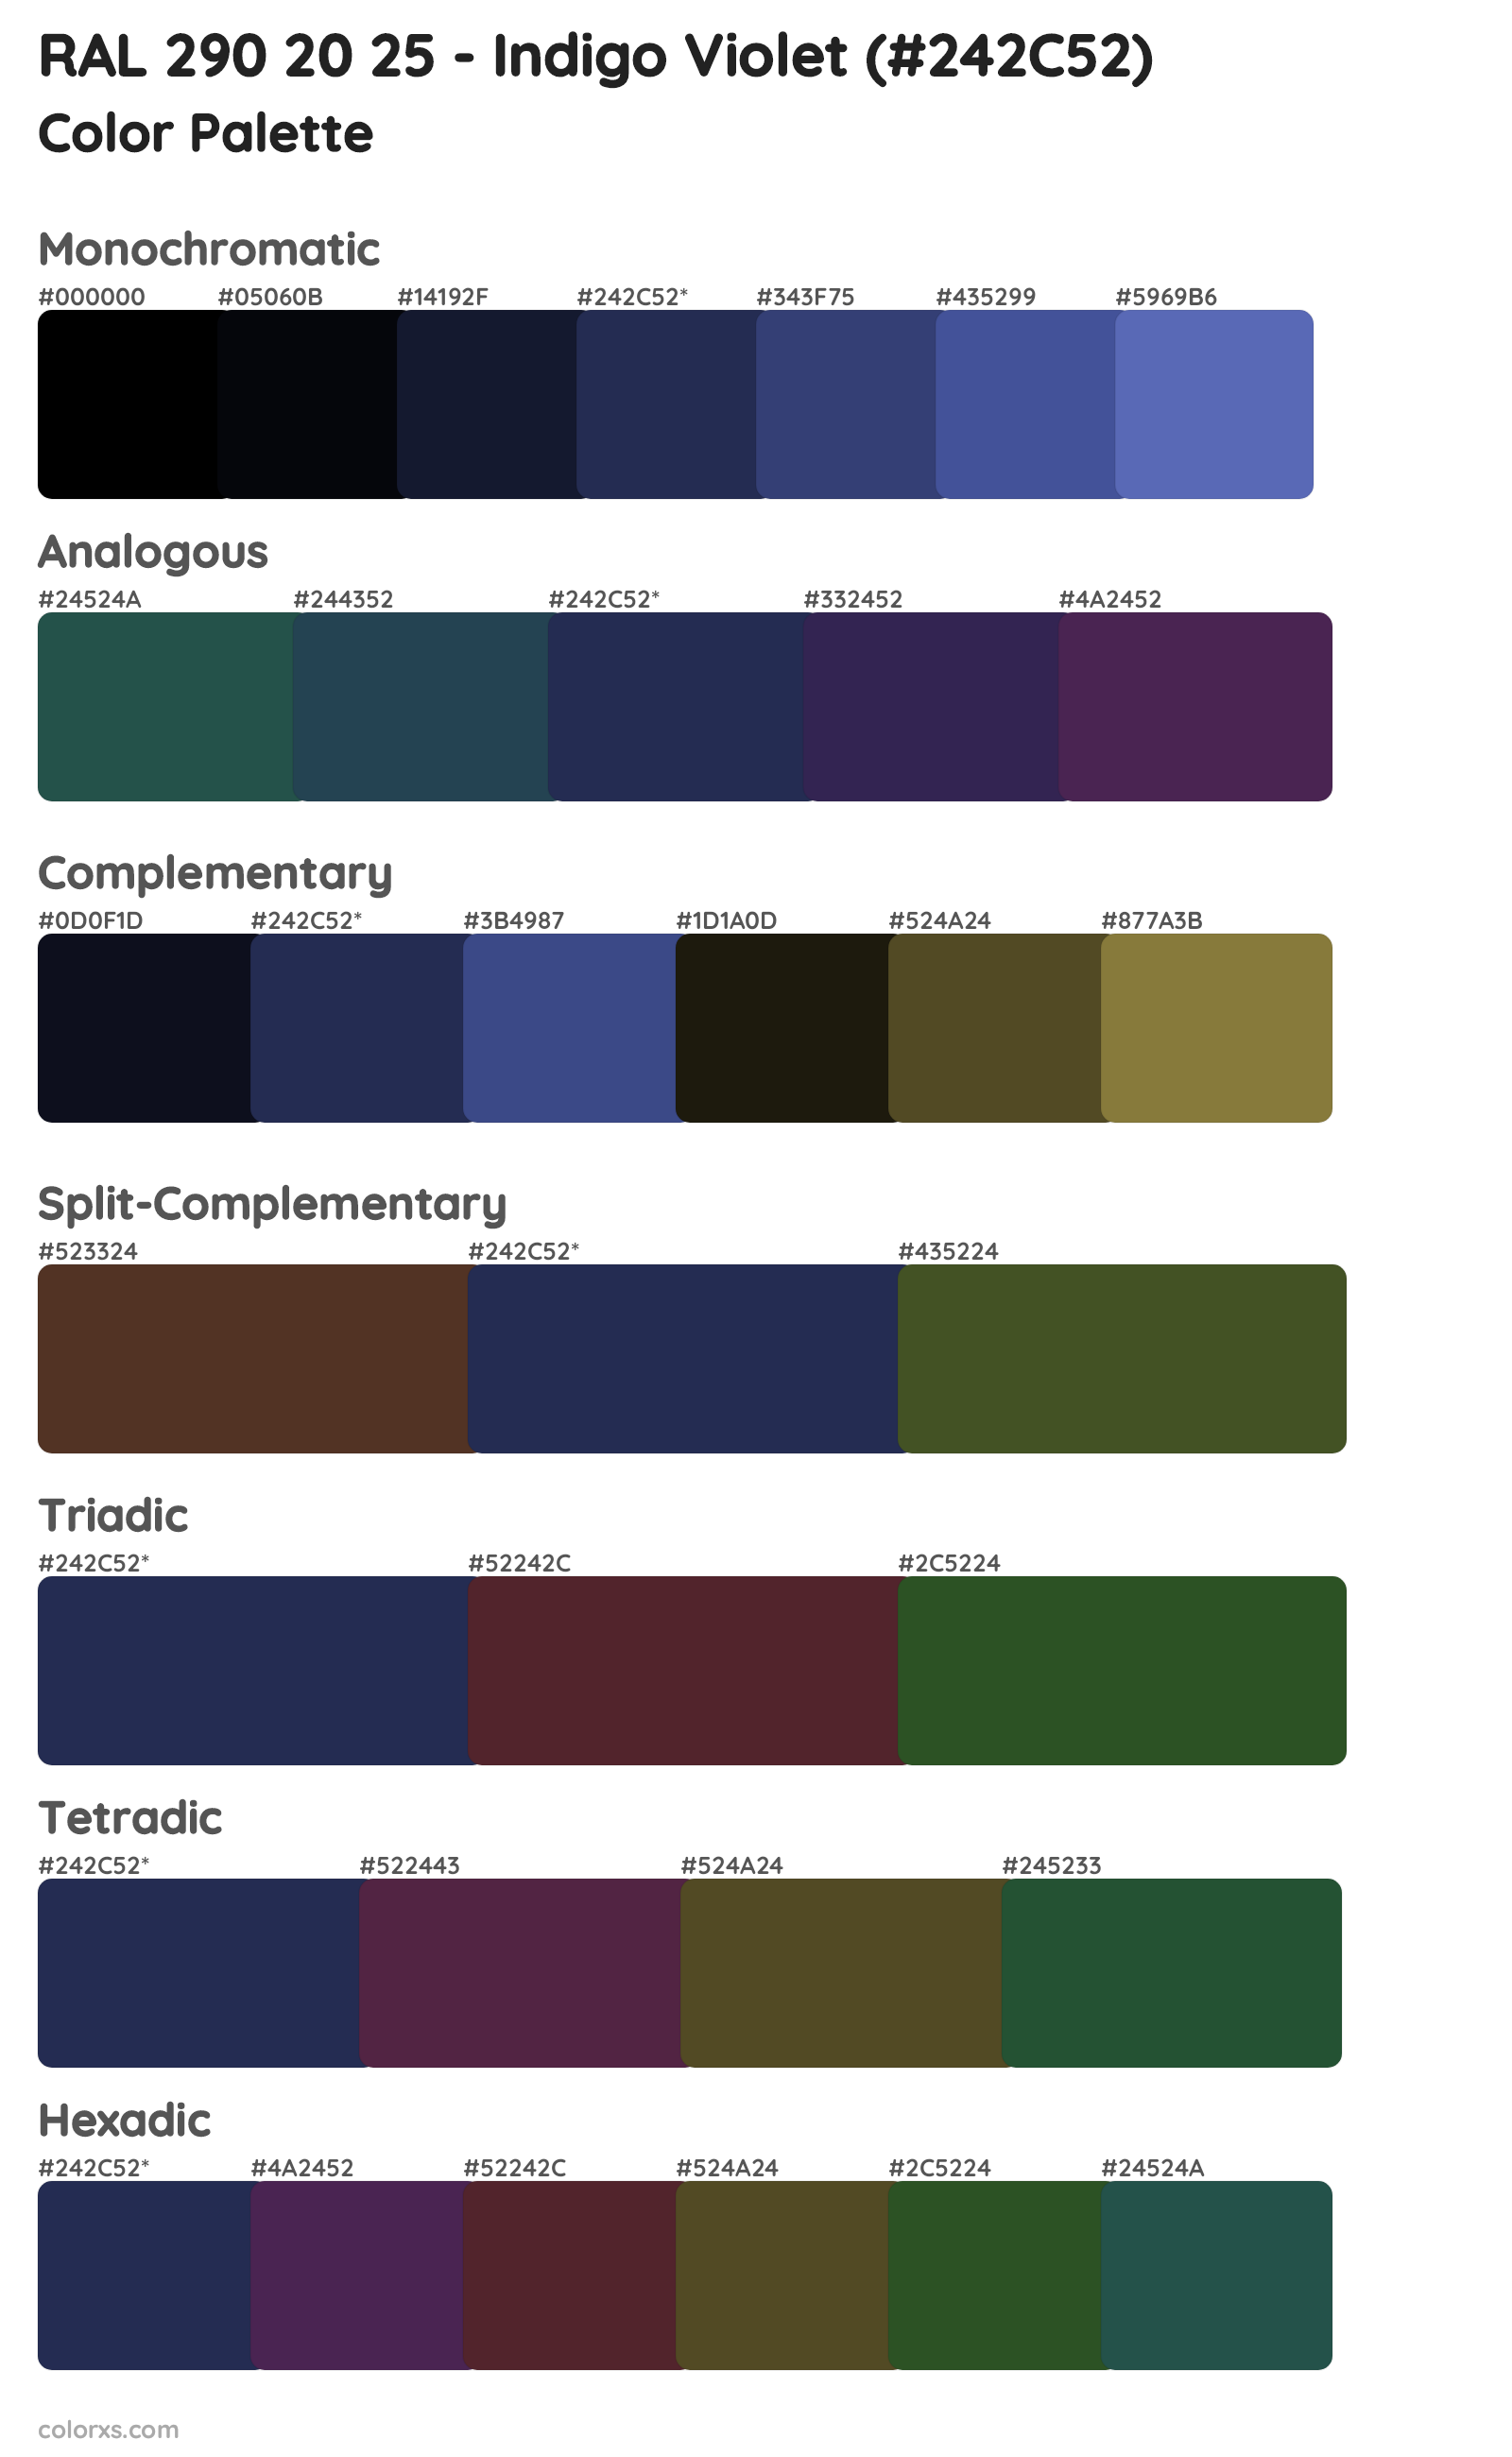 RAL 290 20 25 - Indigo Violet Color Scheme Palettes